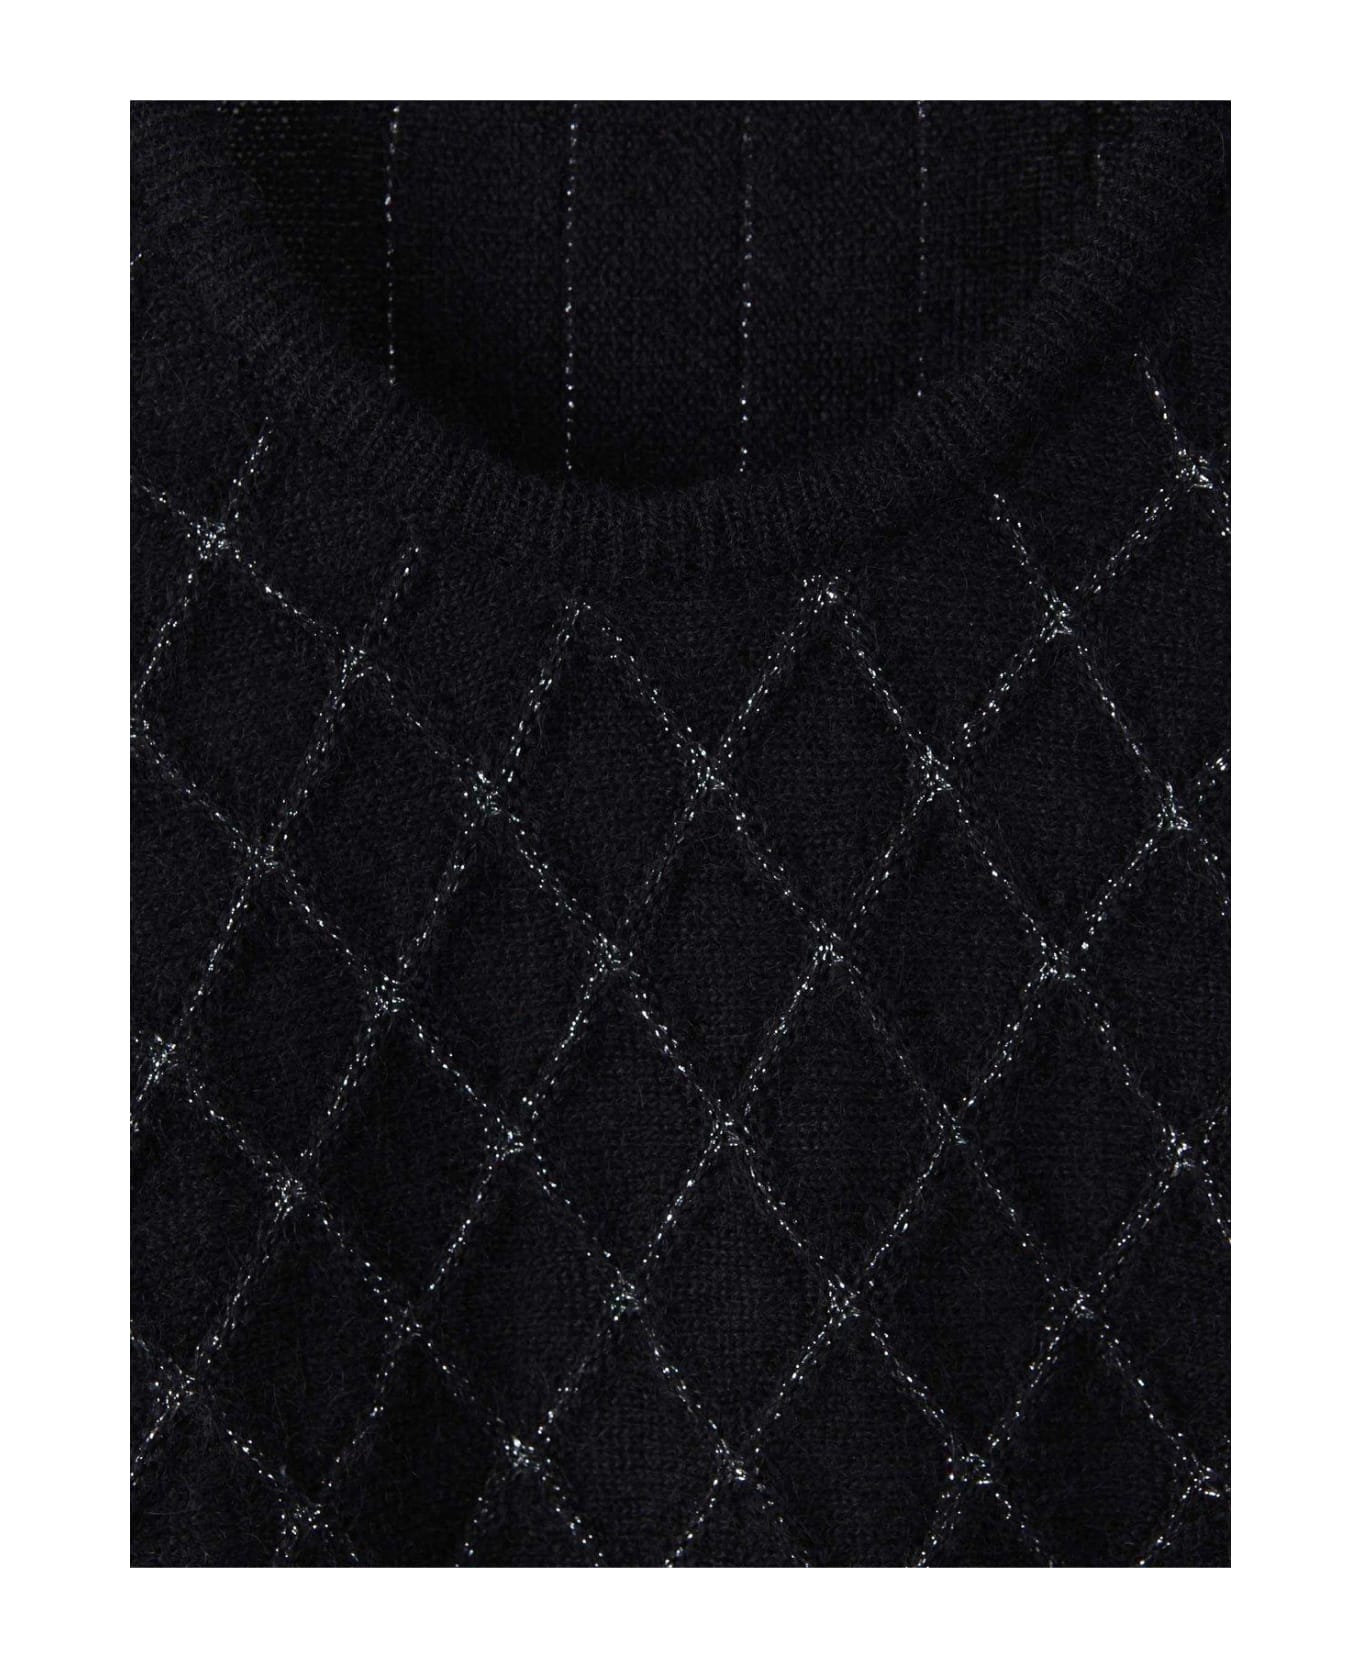 Saint Laurent Crewneck Long-sleeved Sweater - BLACK